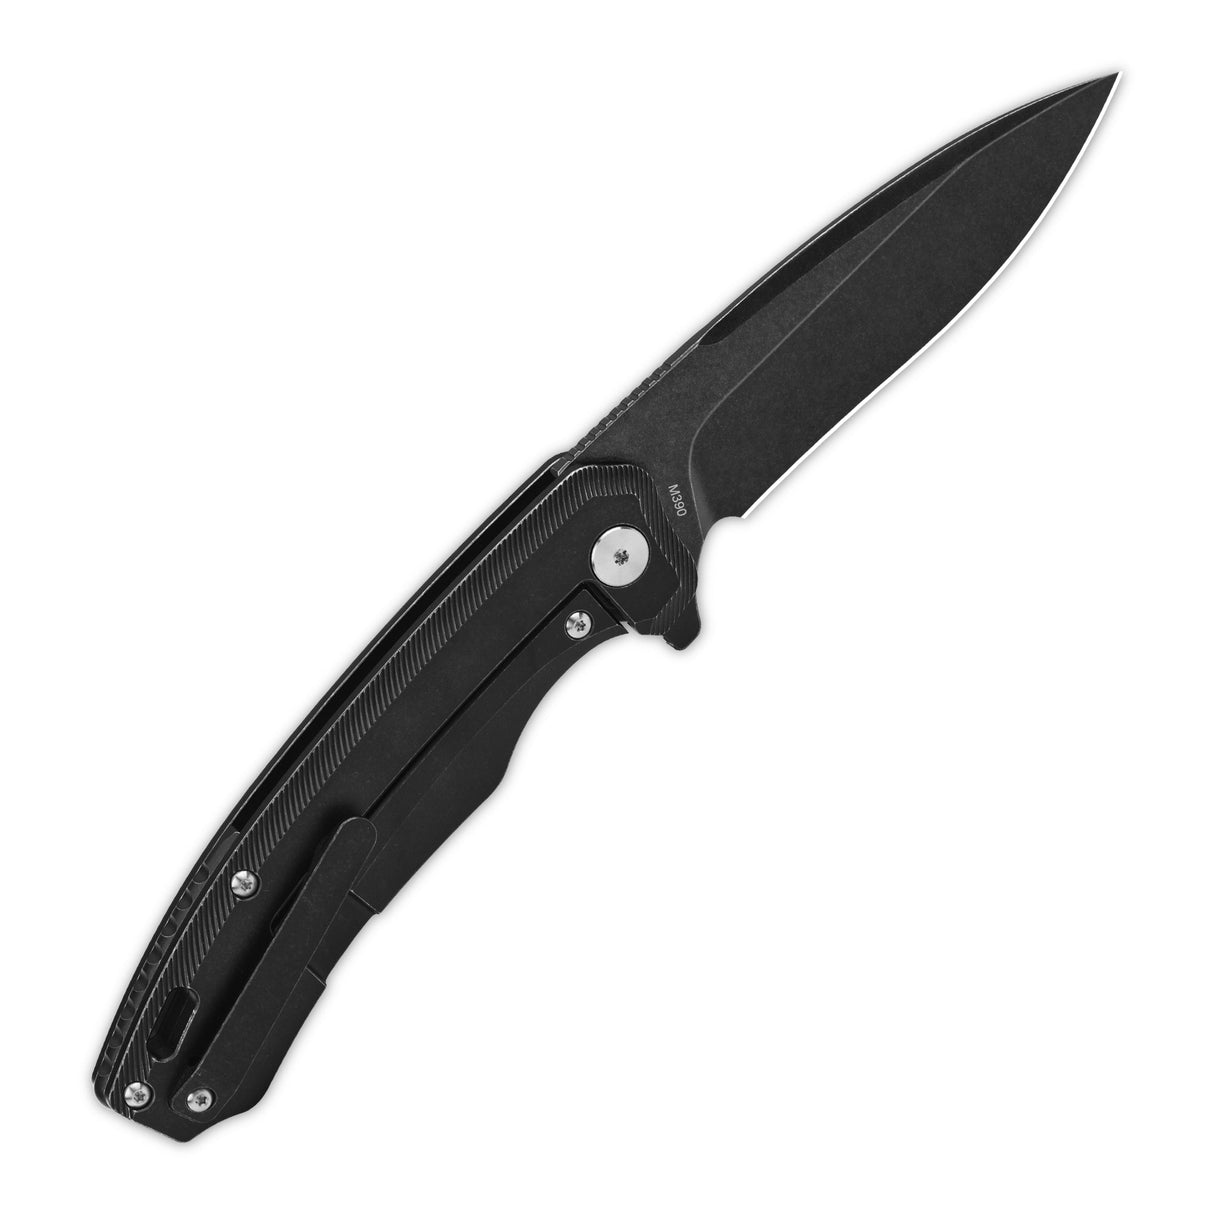 QSP Woodpecker Frame Lock Pocket Knife Böhler M390 Blade Black Stonewashed Titanium Handle